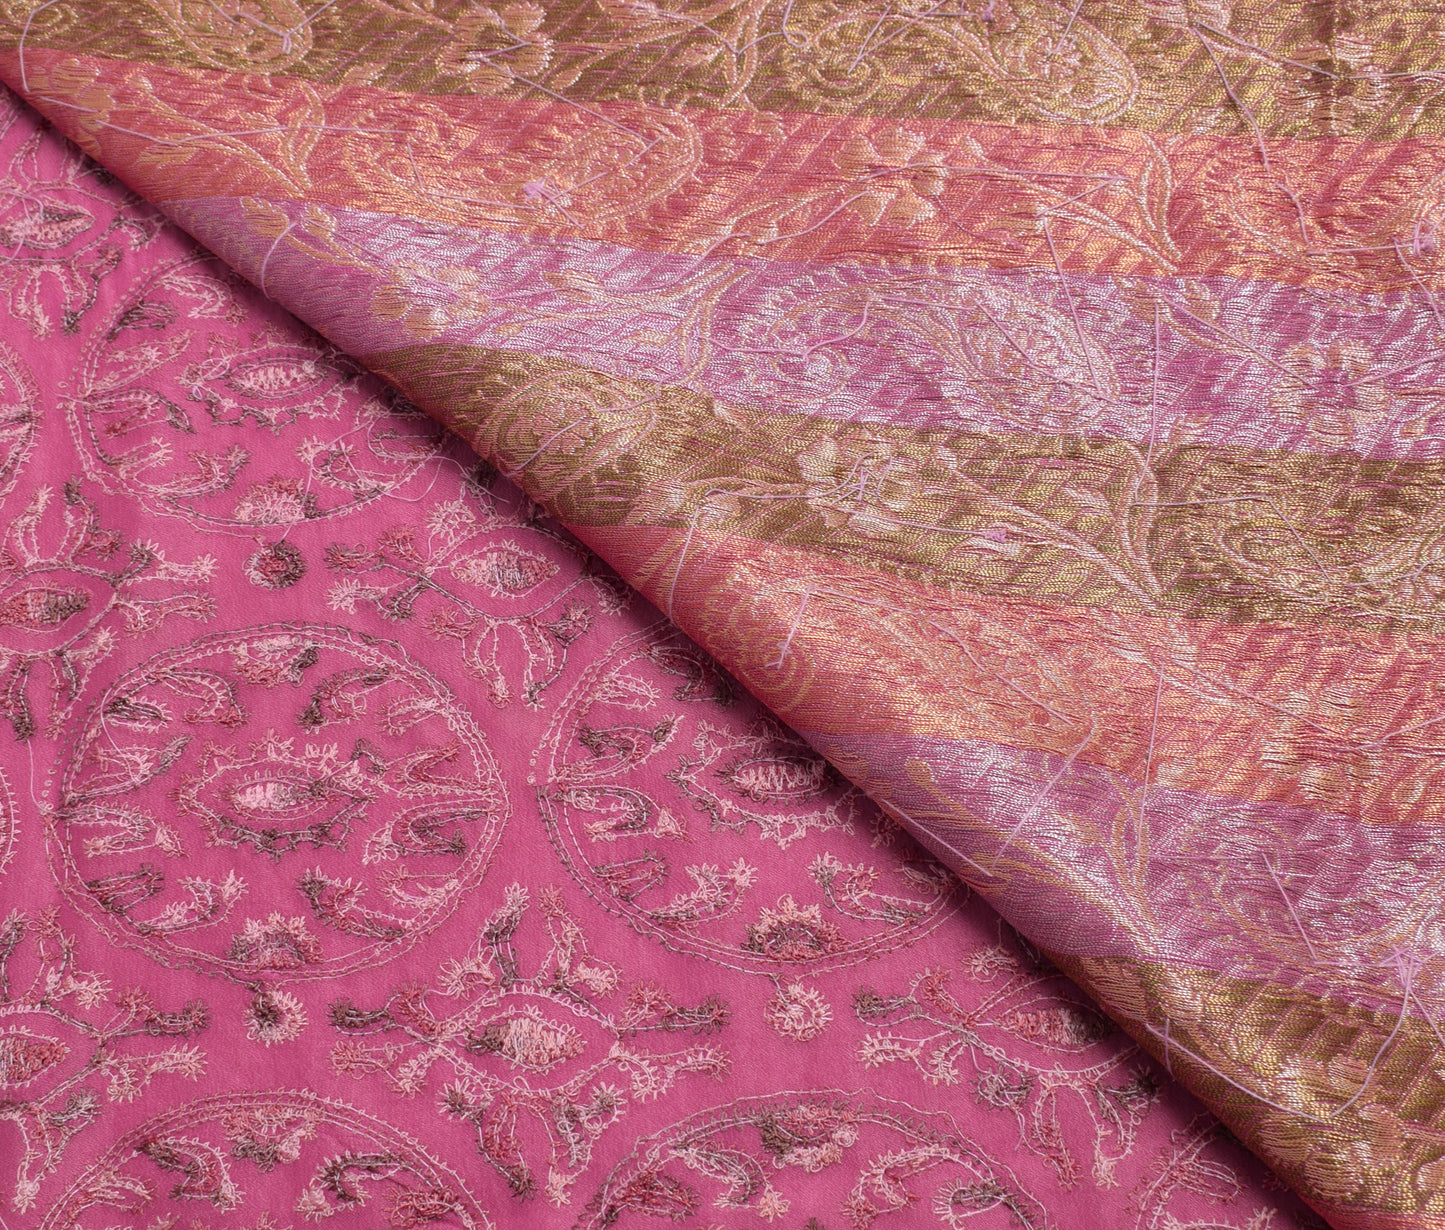 Sushila Vintage Pink Indian Saree 100% Pure Silk Floral Embroidered Sari Fabric